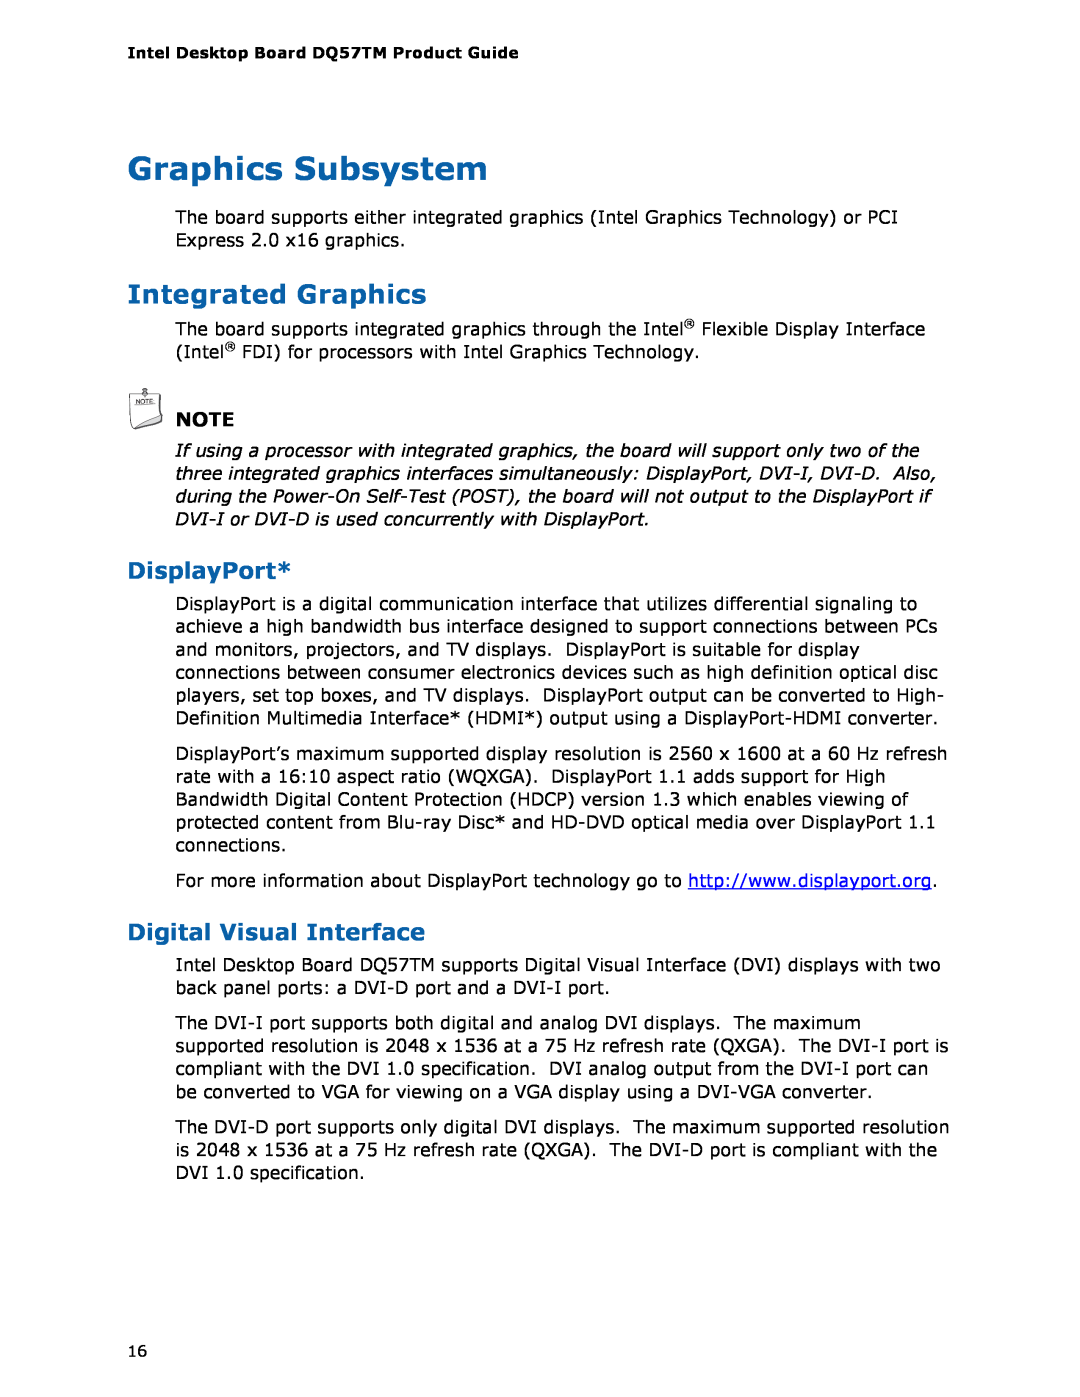 Intel DQ57TM manual Graphics Subsystem, Integrated Graphics, DisplayPort, Digital Visual Interface 